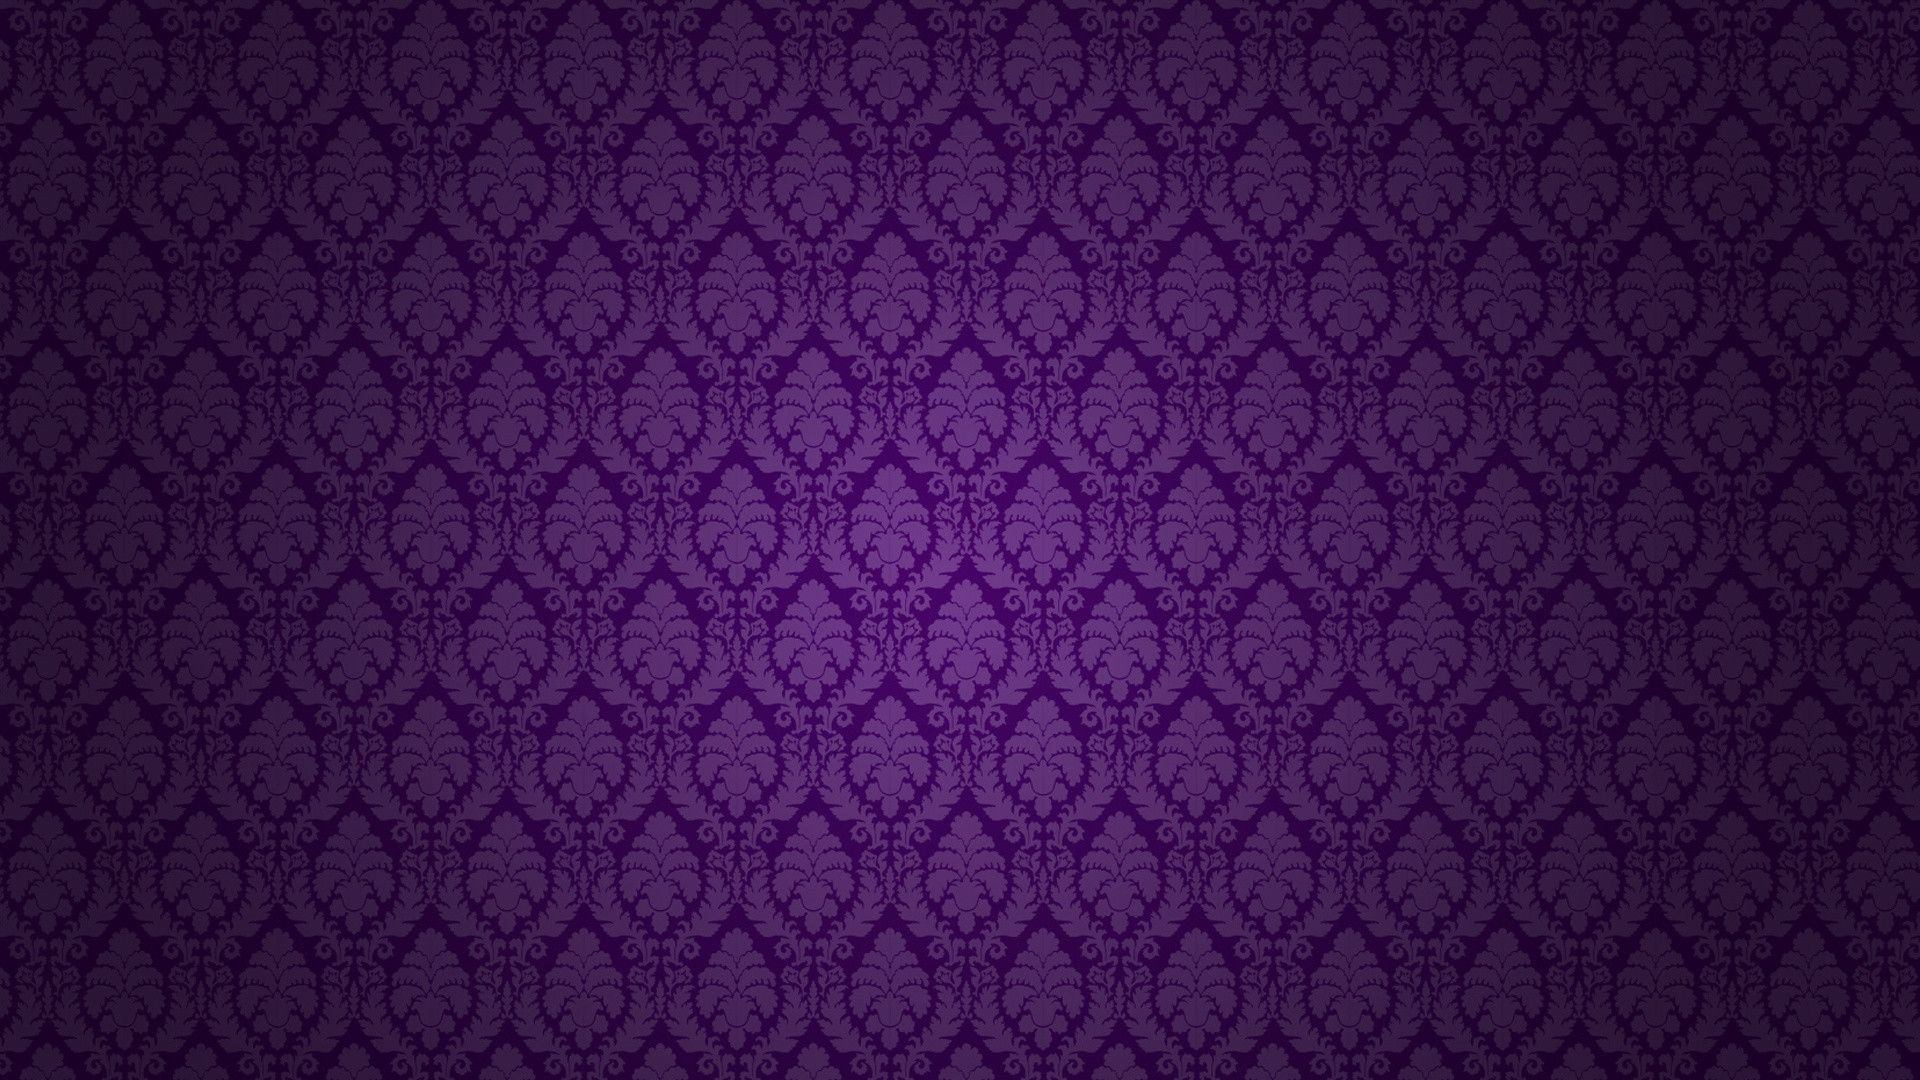 Free Download Royal Purple Aesthetic Wallpapers Top Royal Purple 1920x1080 For Your Desktop Mobile Tablet Explore 57 Purple Wallpapers Free Purple Wallpaper Background Purple Wallpapers Purple Images For Wallpaper